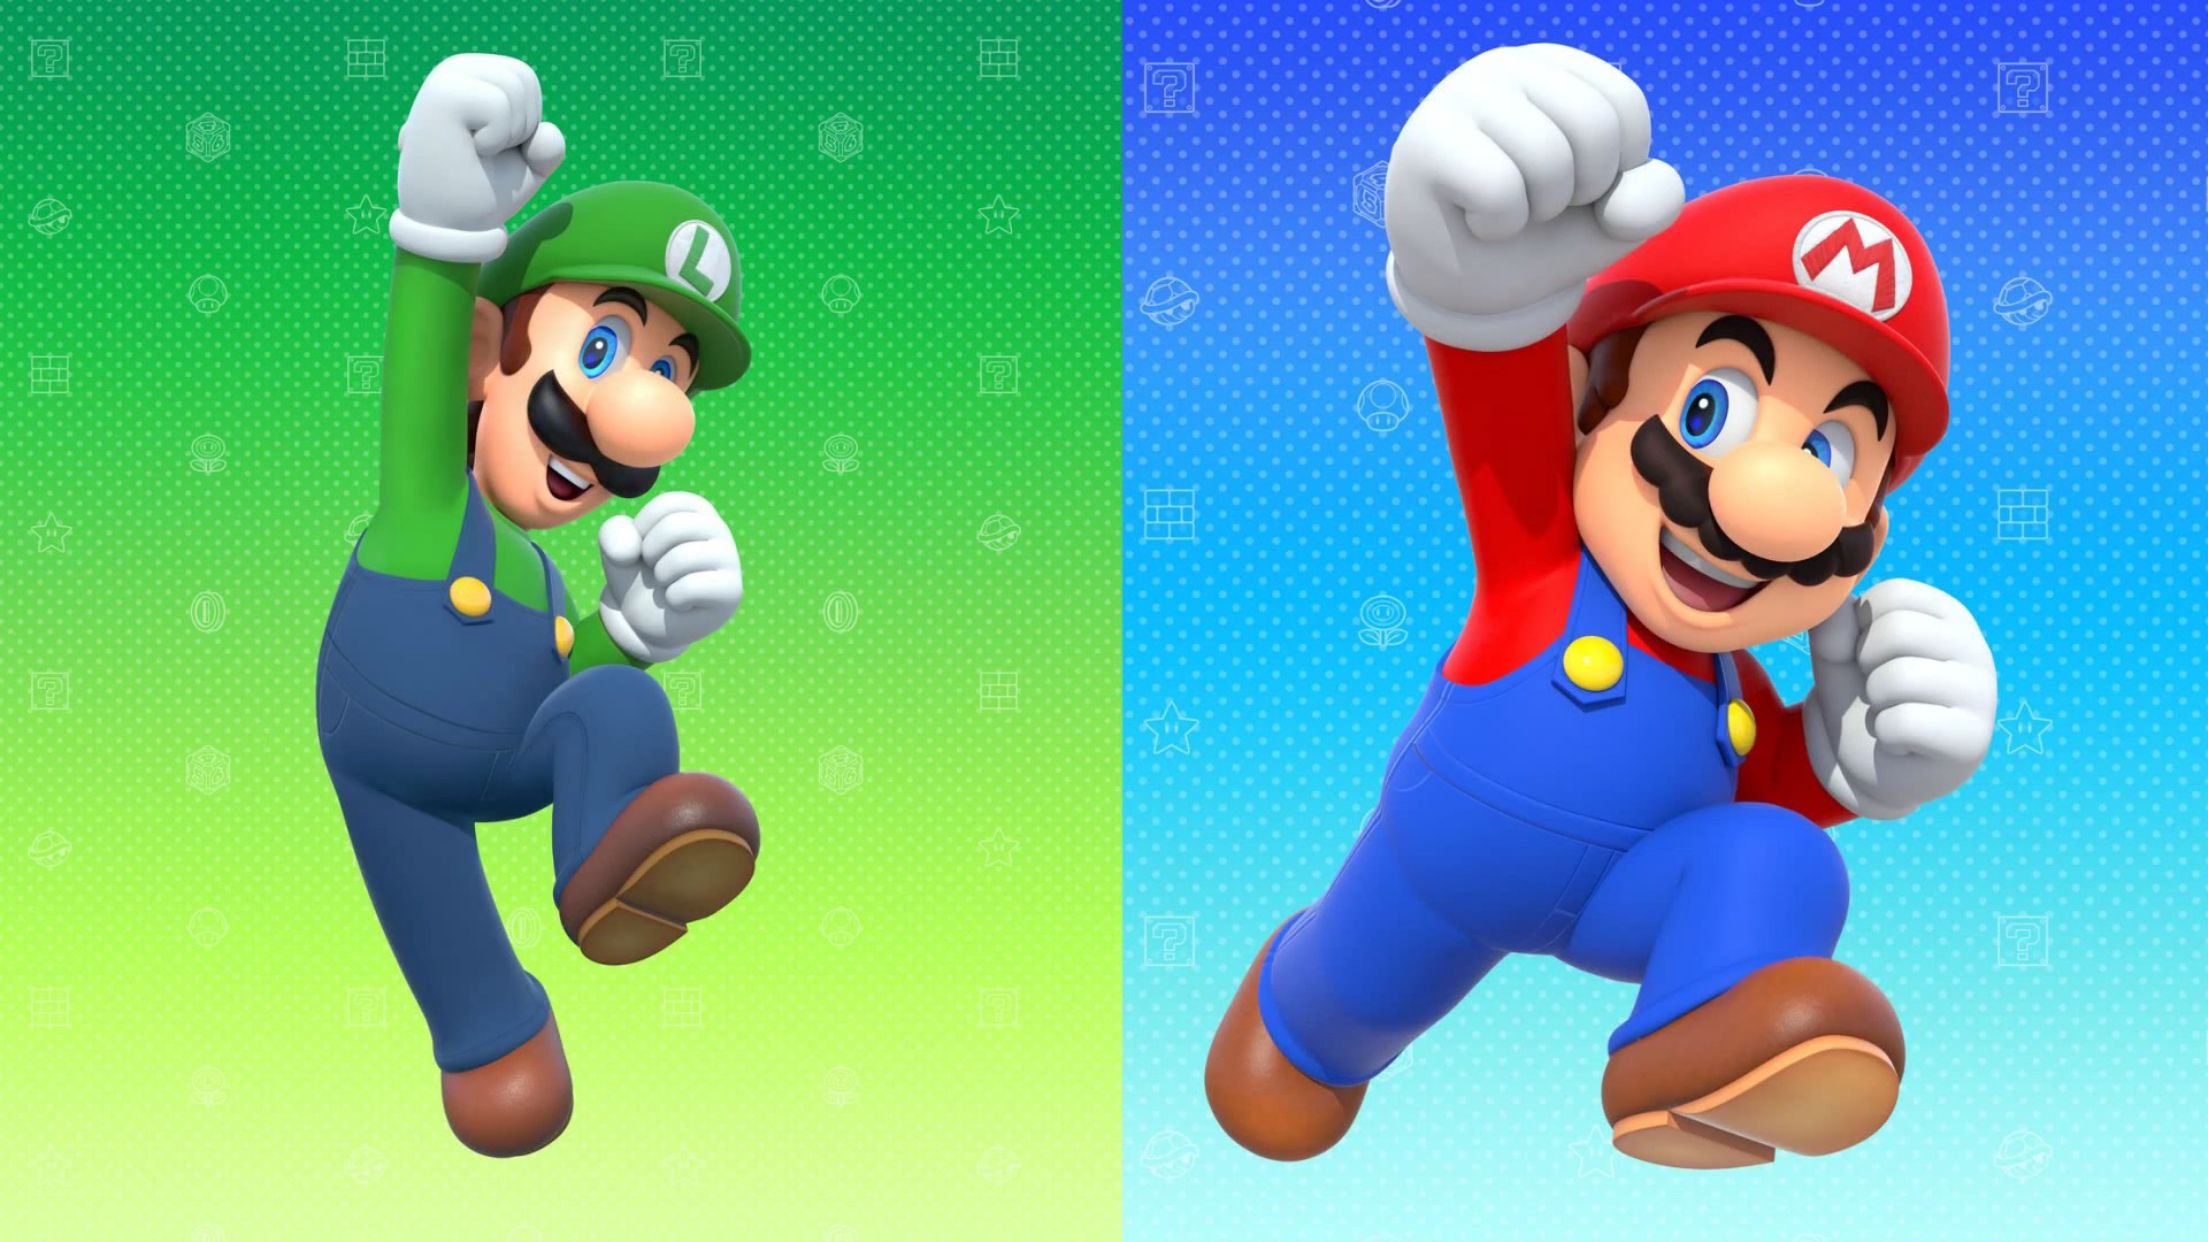 Сколько супер марио. Марио и Луиджи. Марио и Луиджи из Денди. Марио (персонаж игр и Луиджи. Супер братья Марио Луиджи.